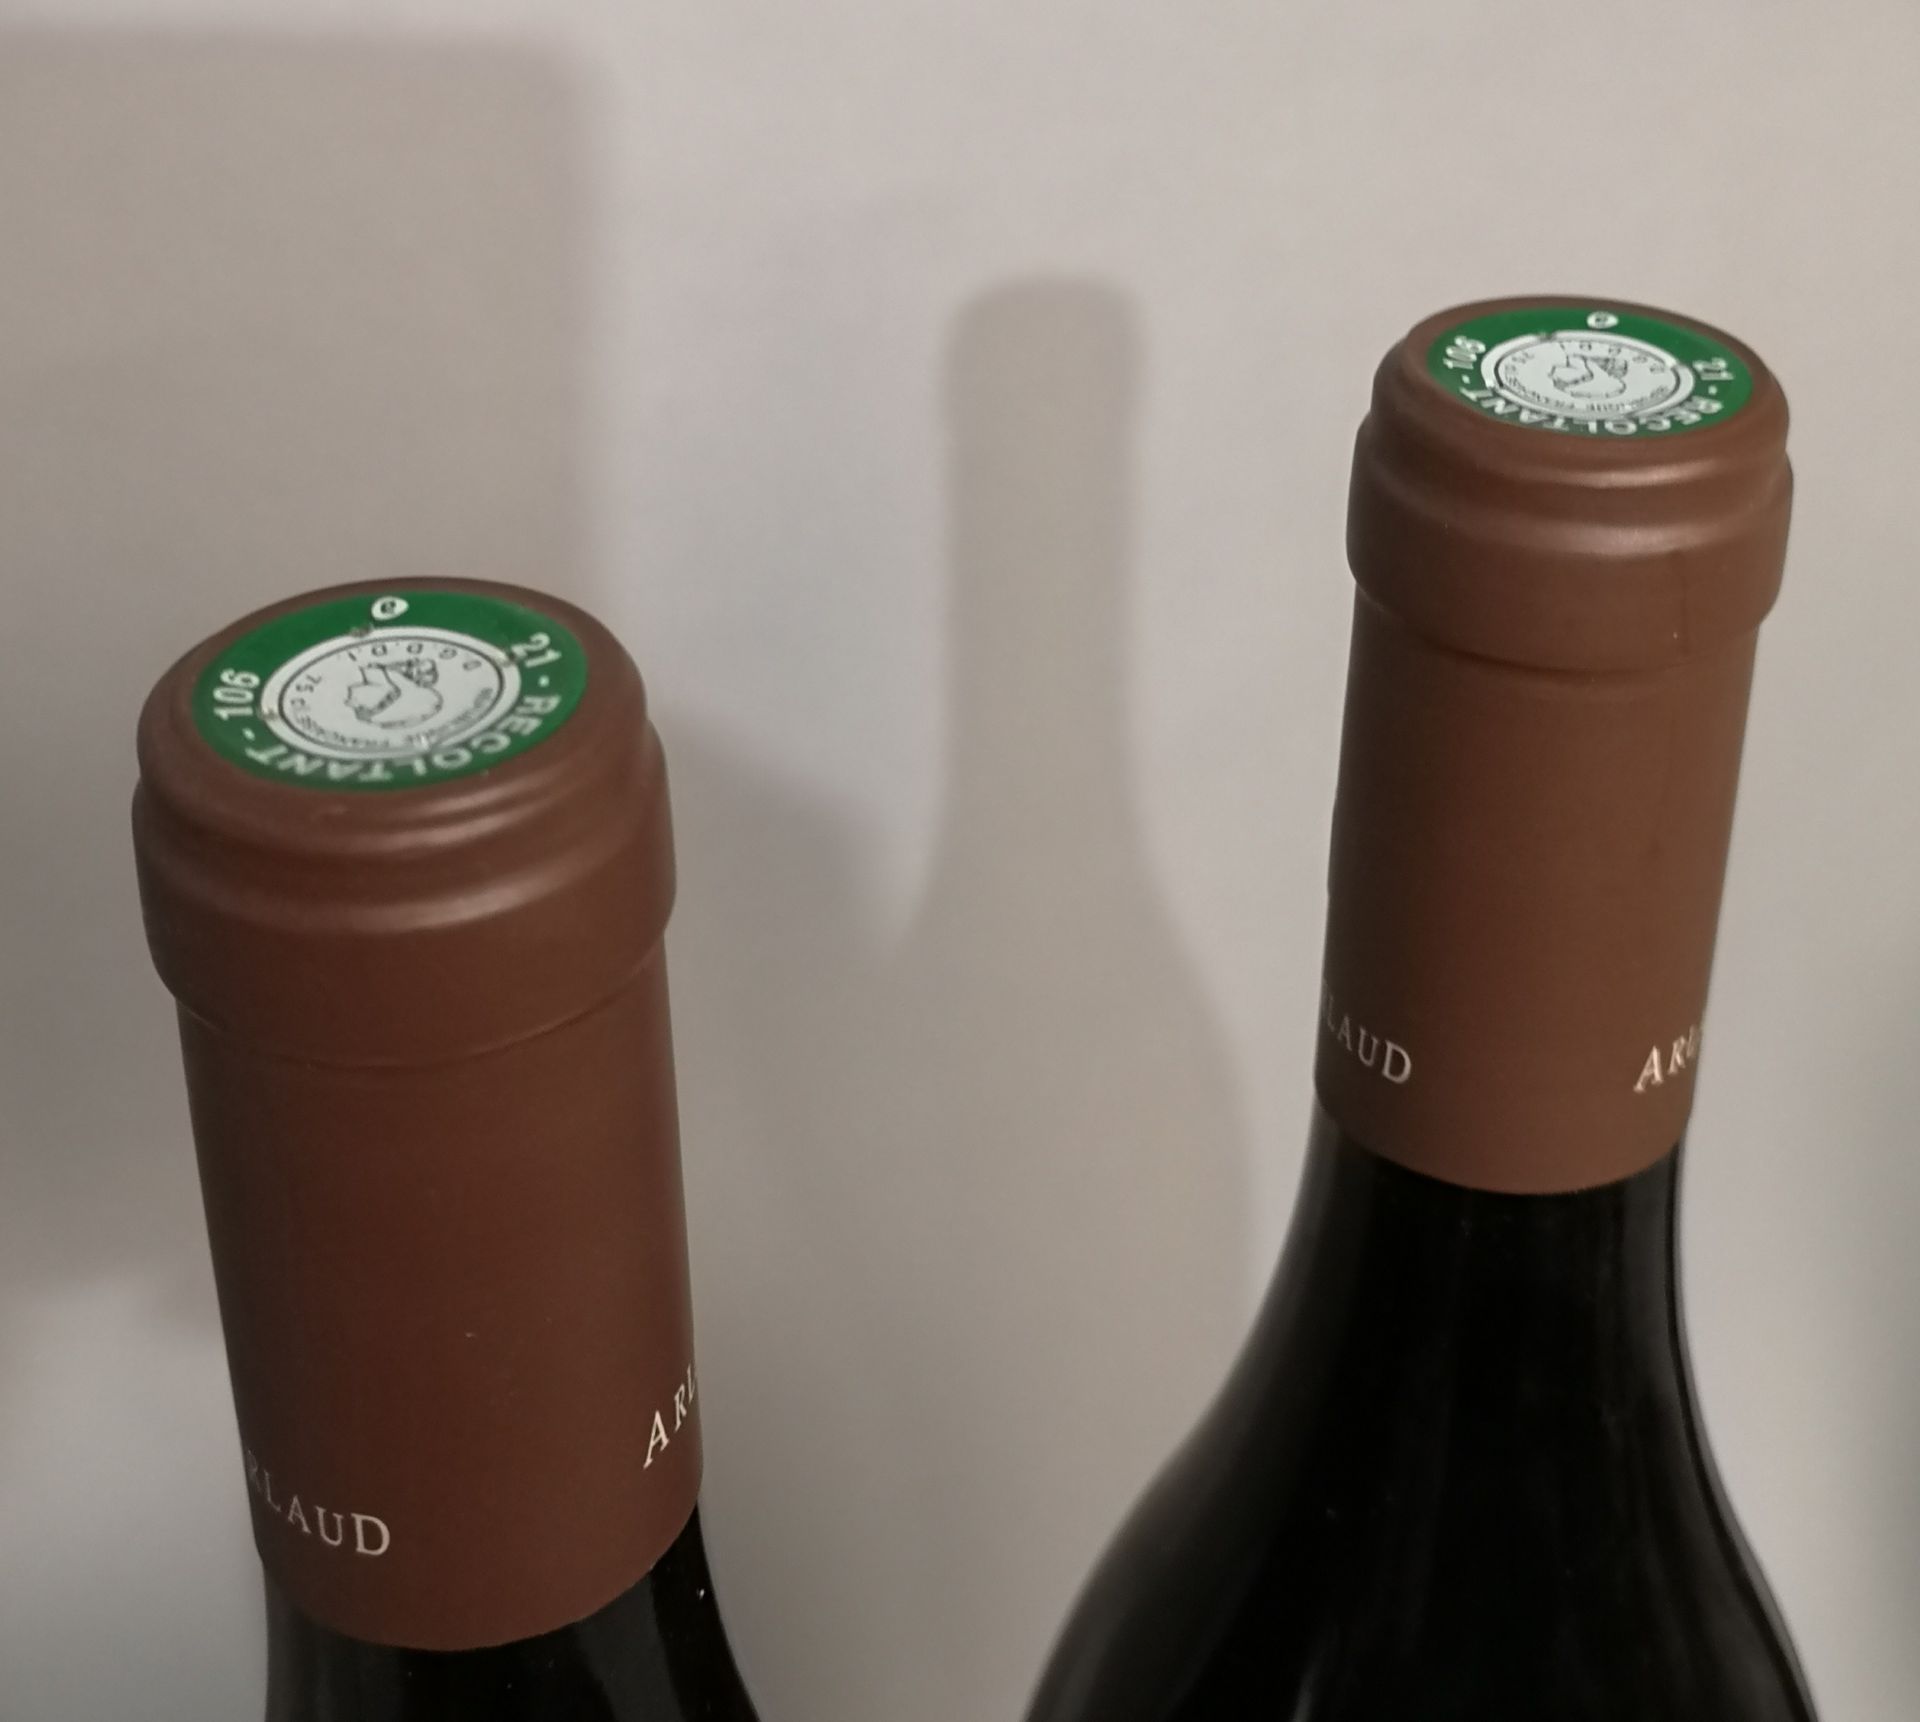 2 closed bottles of La Roche Grand Cru - Domaine Arlaud 2015. - Bild 2 aus 2